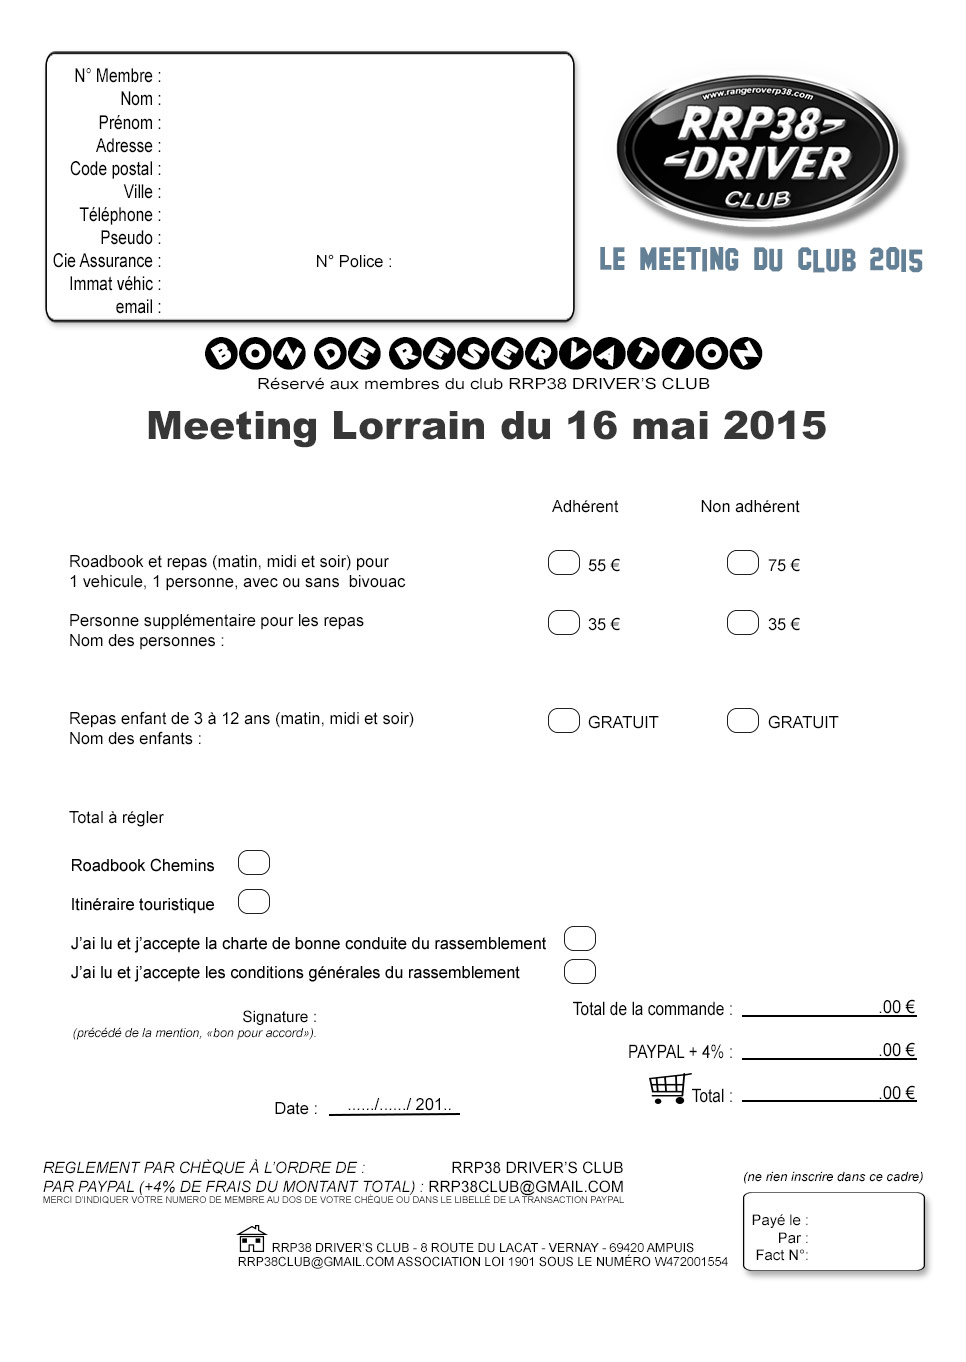 ZE meeting 2015, le formulaire Br-mee13